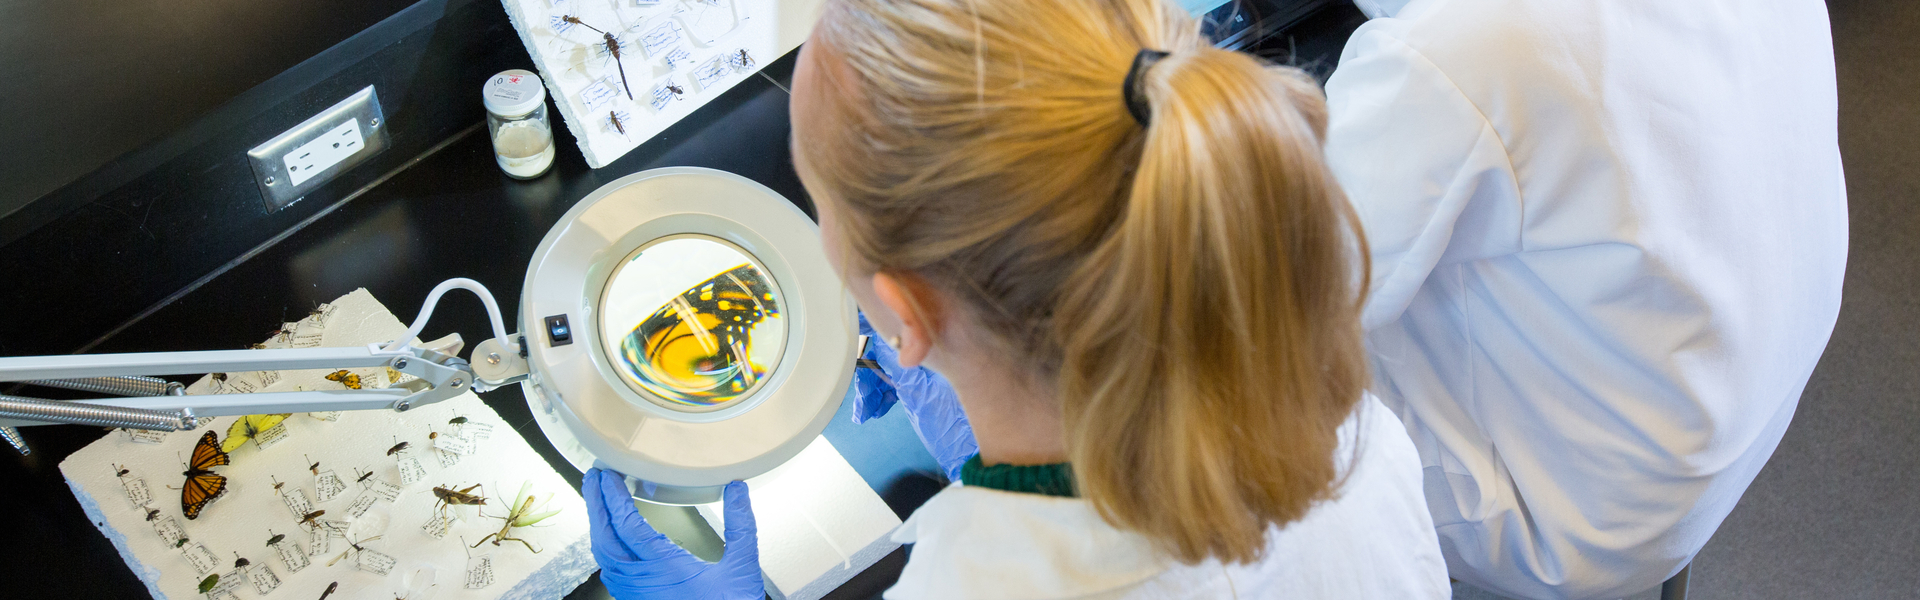 Students studing specimens with a magnifyer